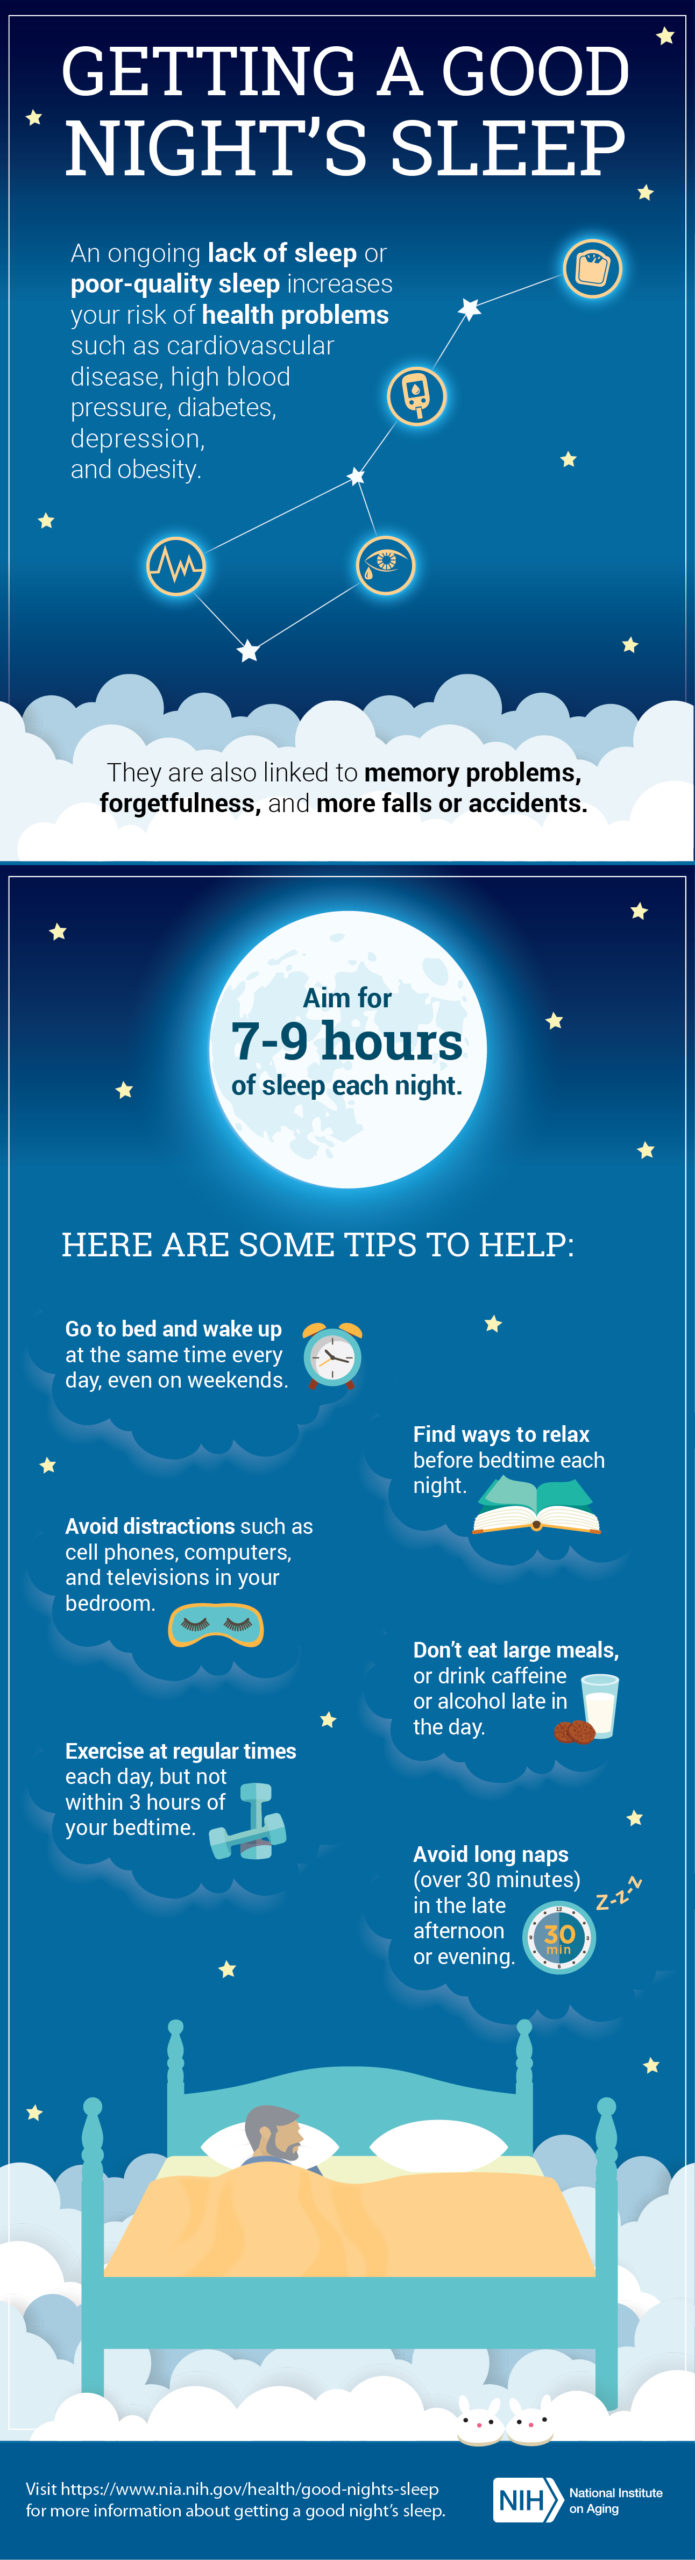 Getting A Good Night's Sleep Infographic